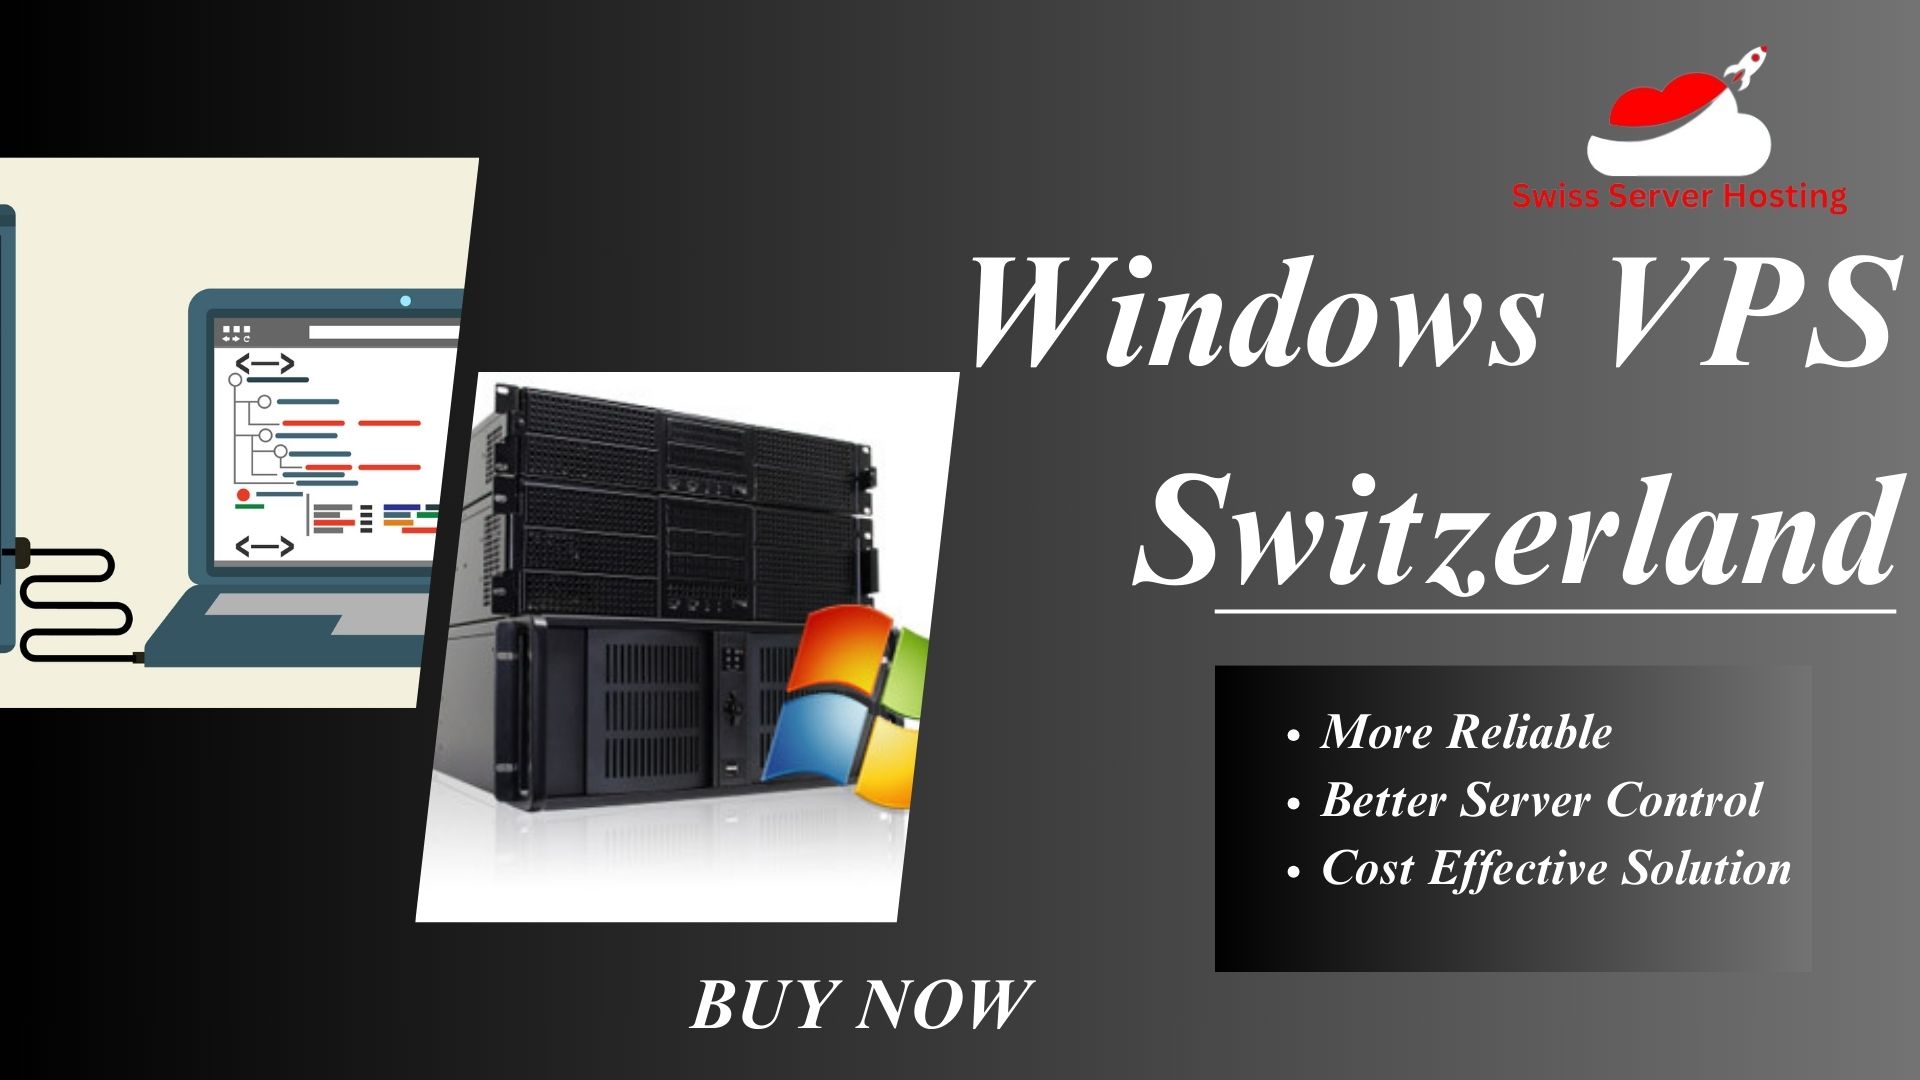 Windows VPS Switzerland